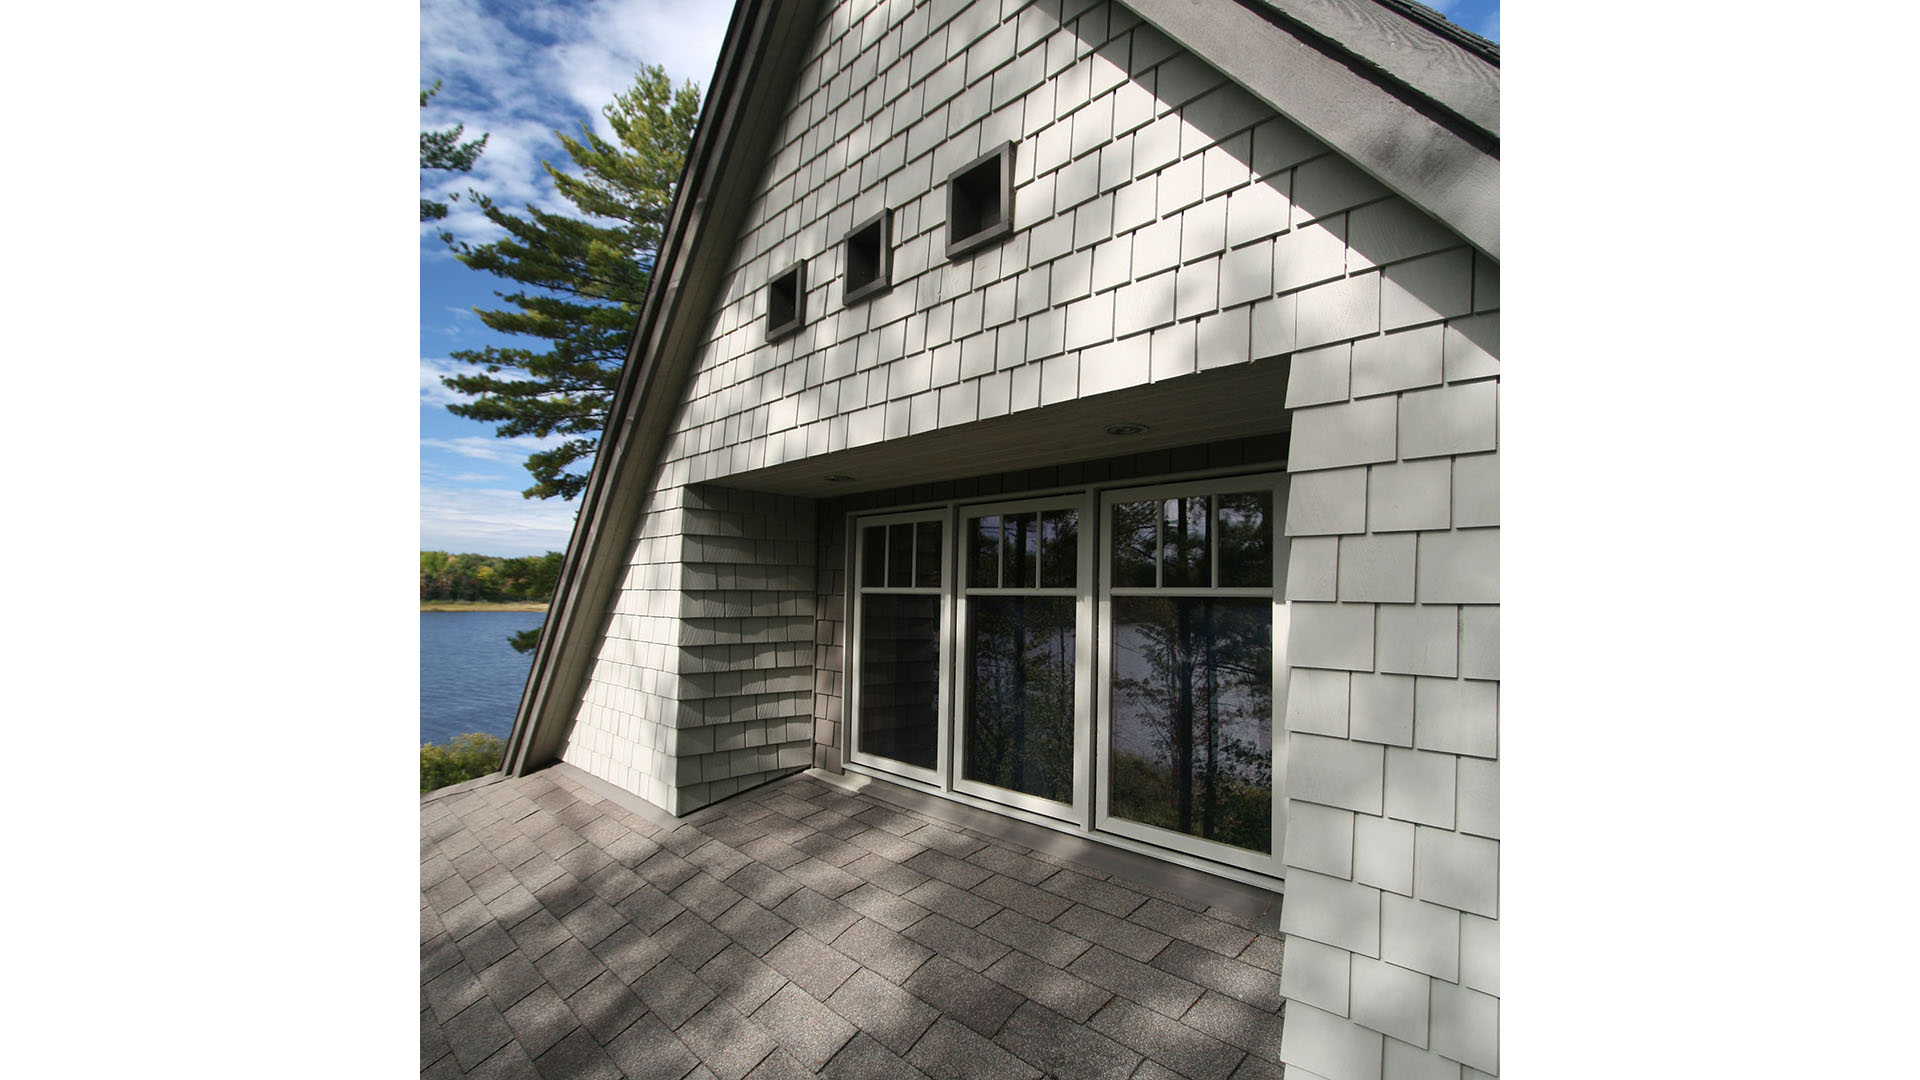 architect designed lakefront home - muskoka - recessed windows upper gable